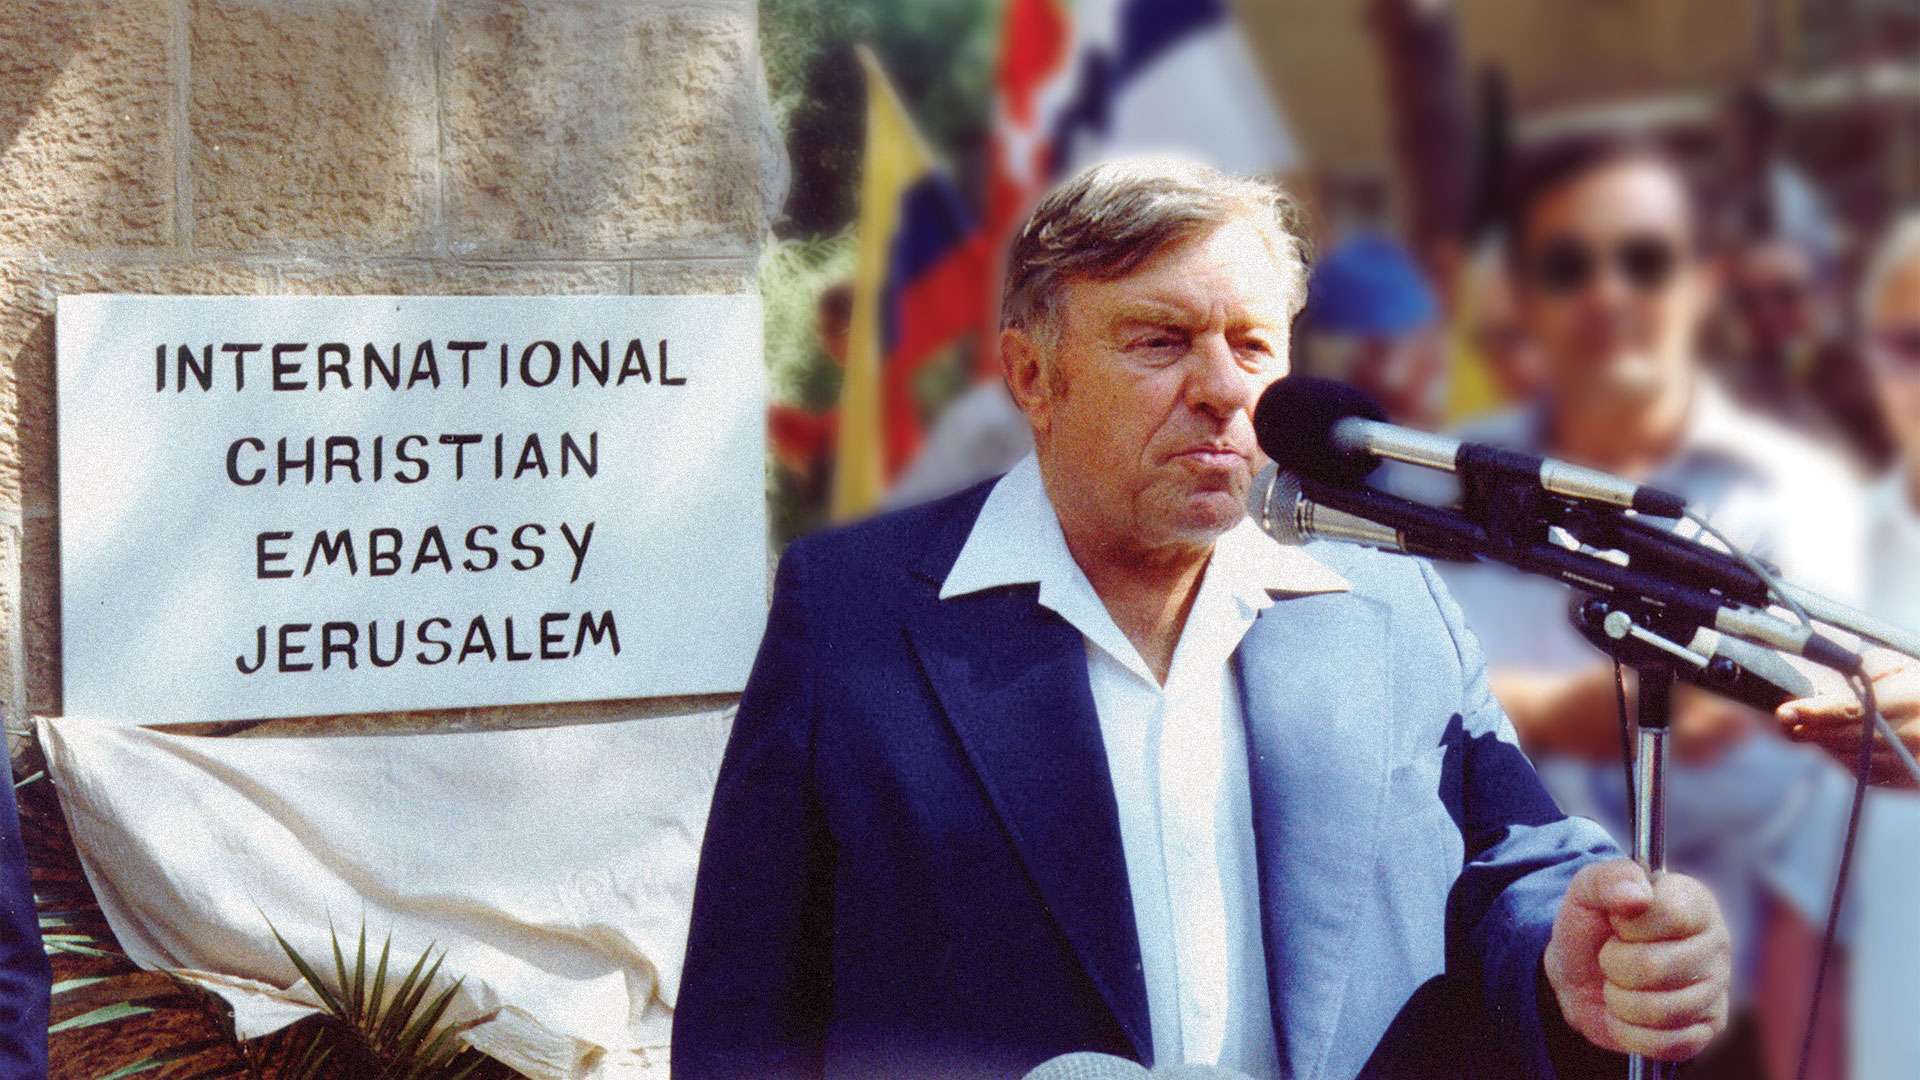 Former Mayor of Jerusalem, Teddy Kollek, opens the Christian Embassy